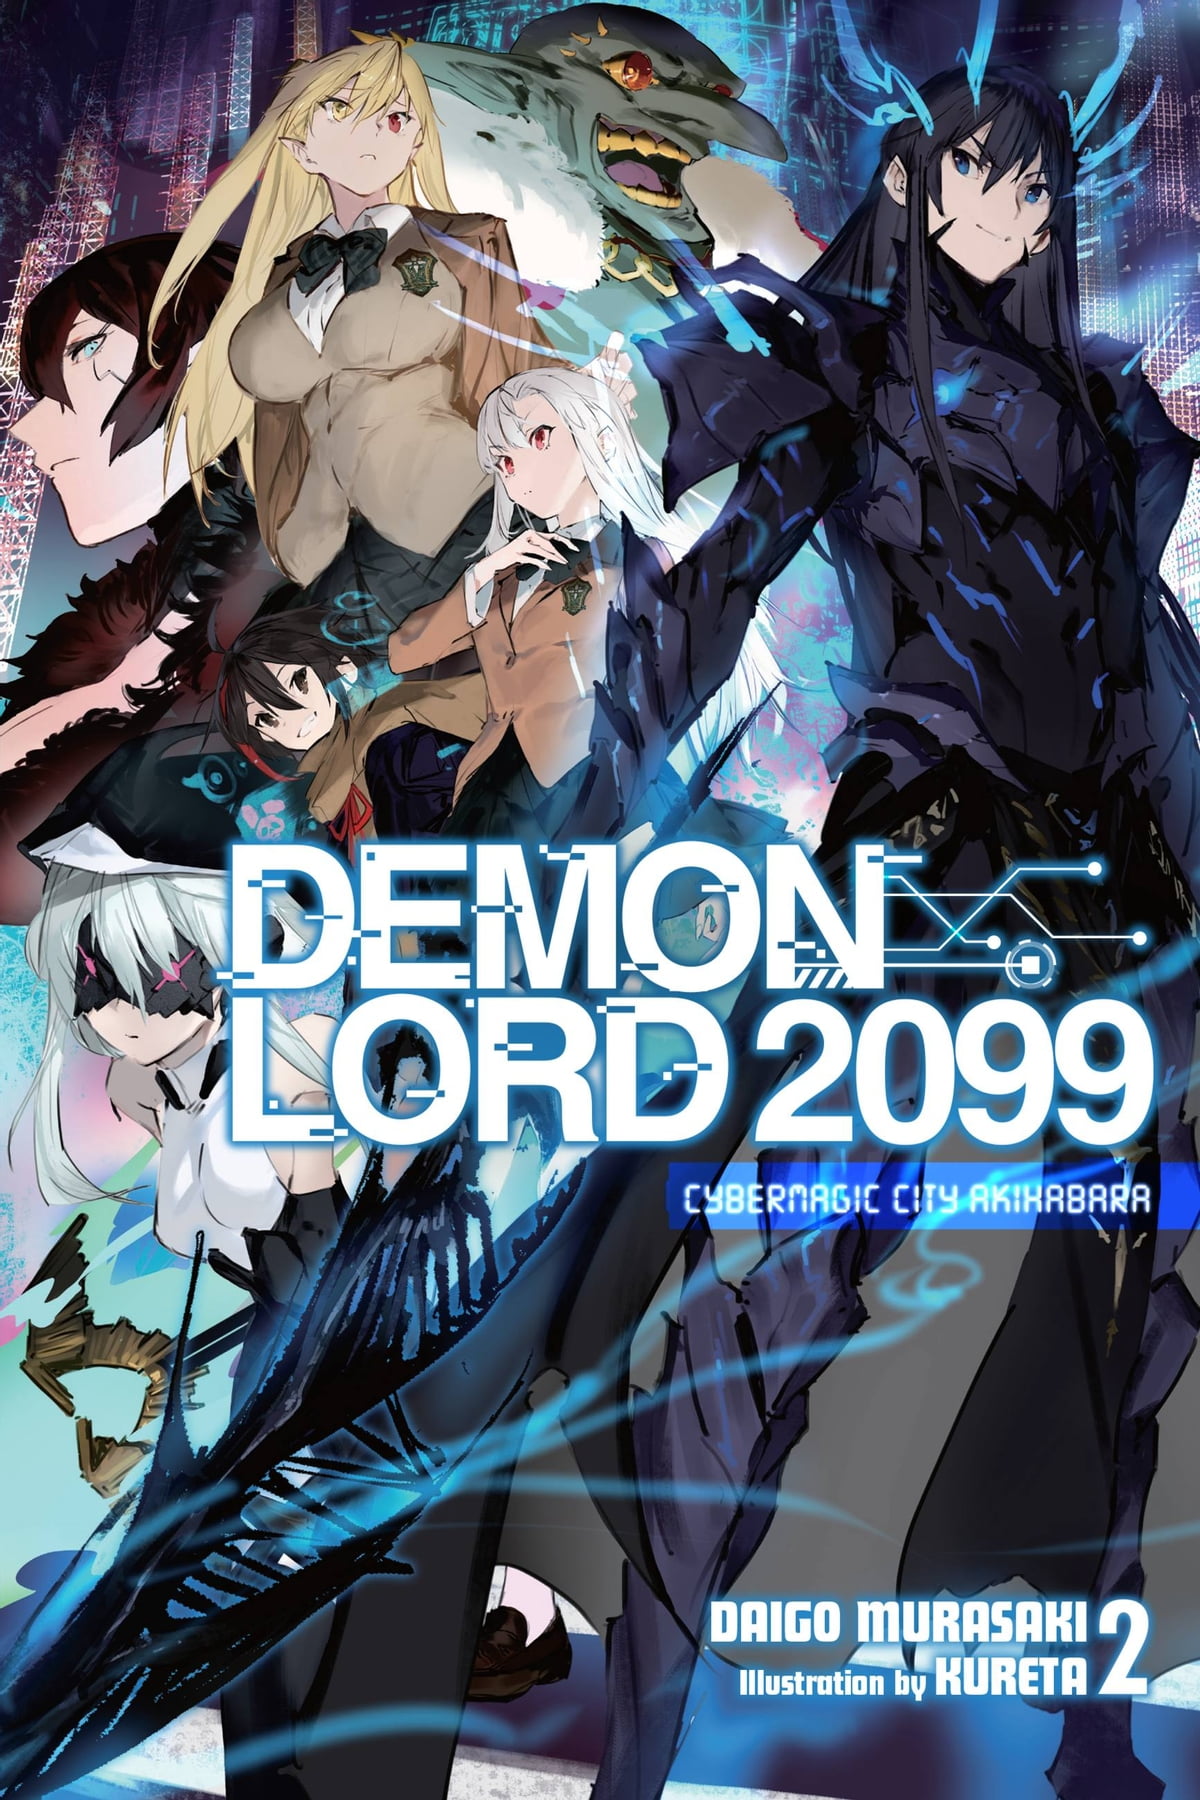 Demon Lord 2099 anime